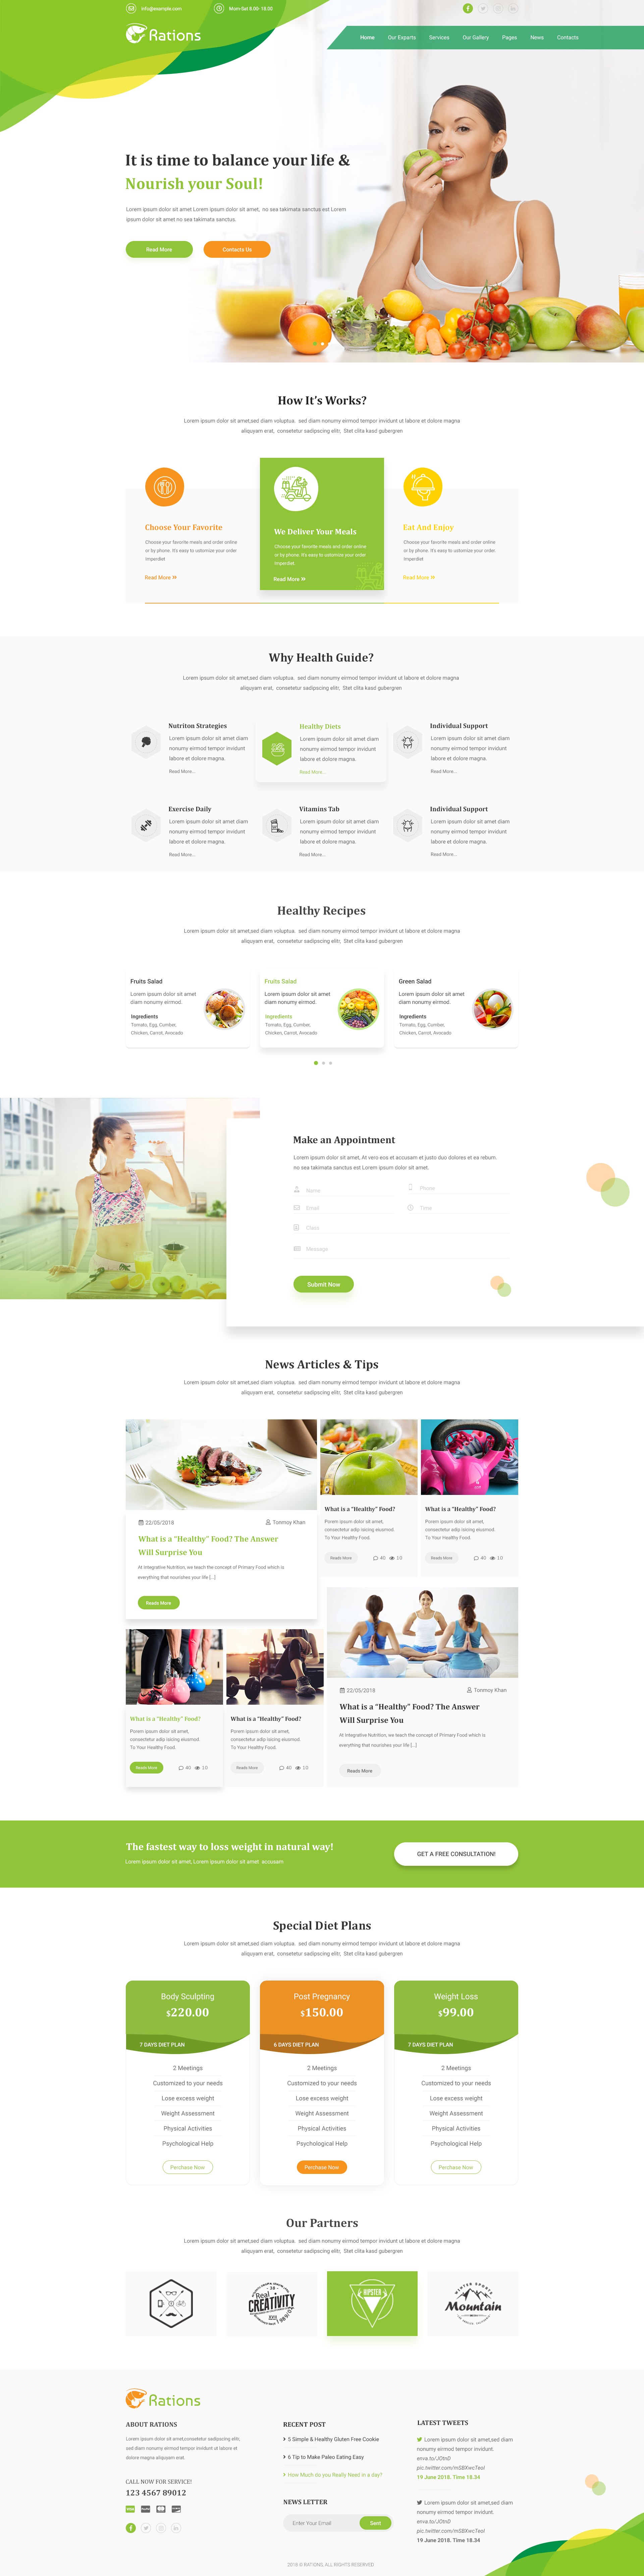 Ration - Diet & Nutrition Website Templates - 1